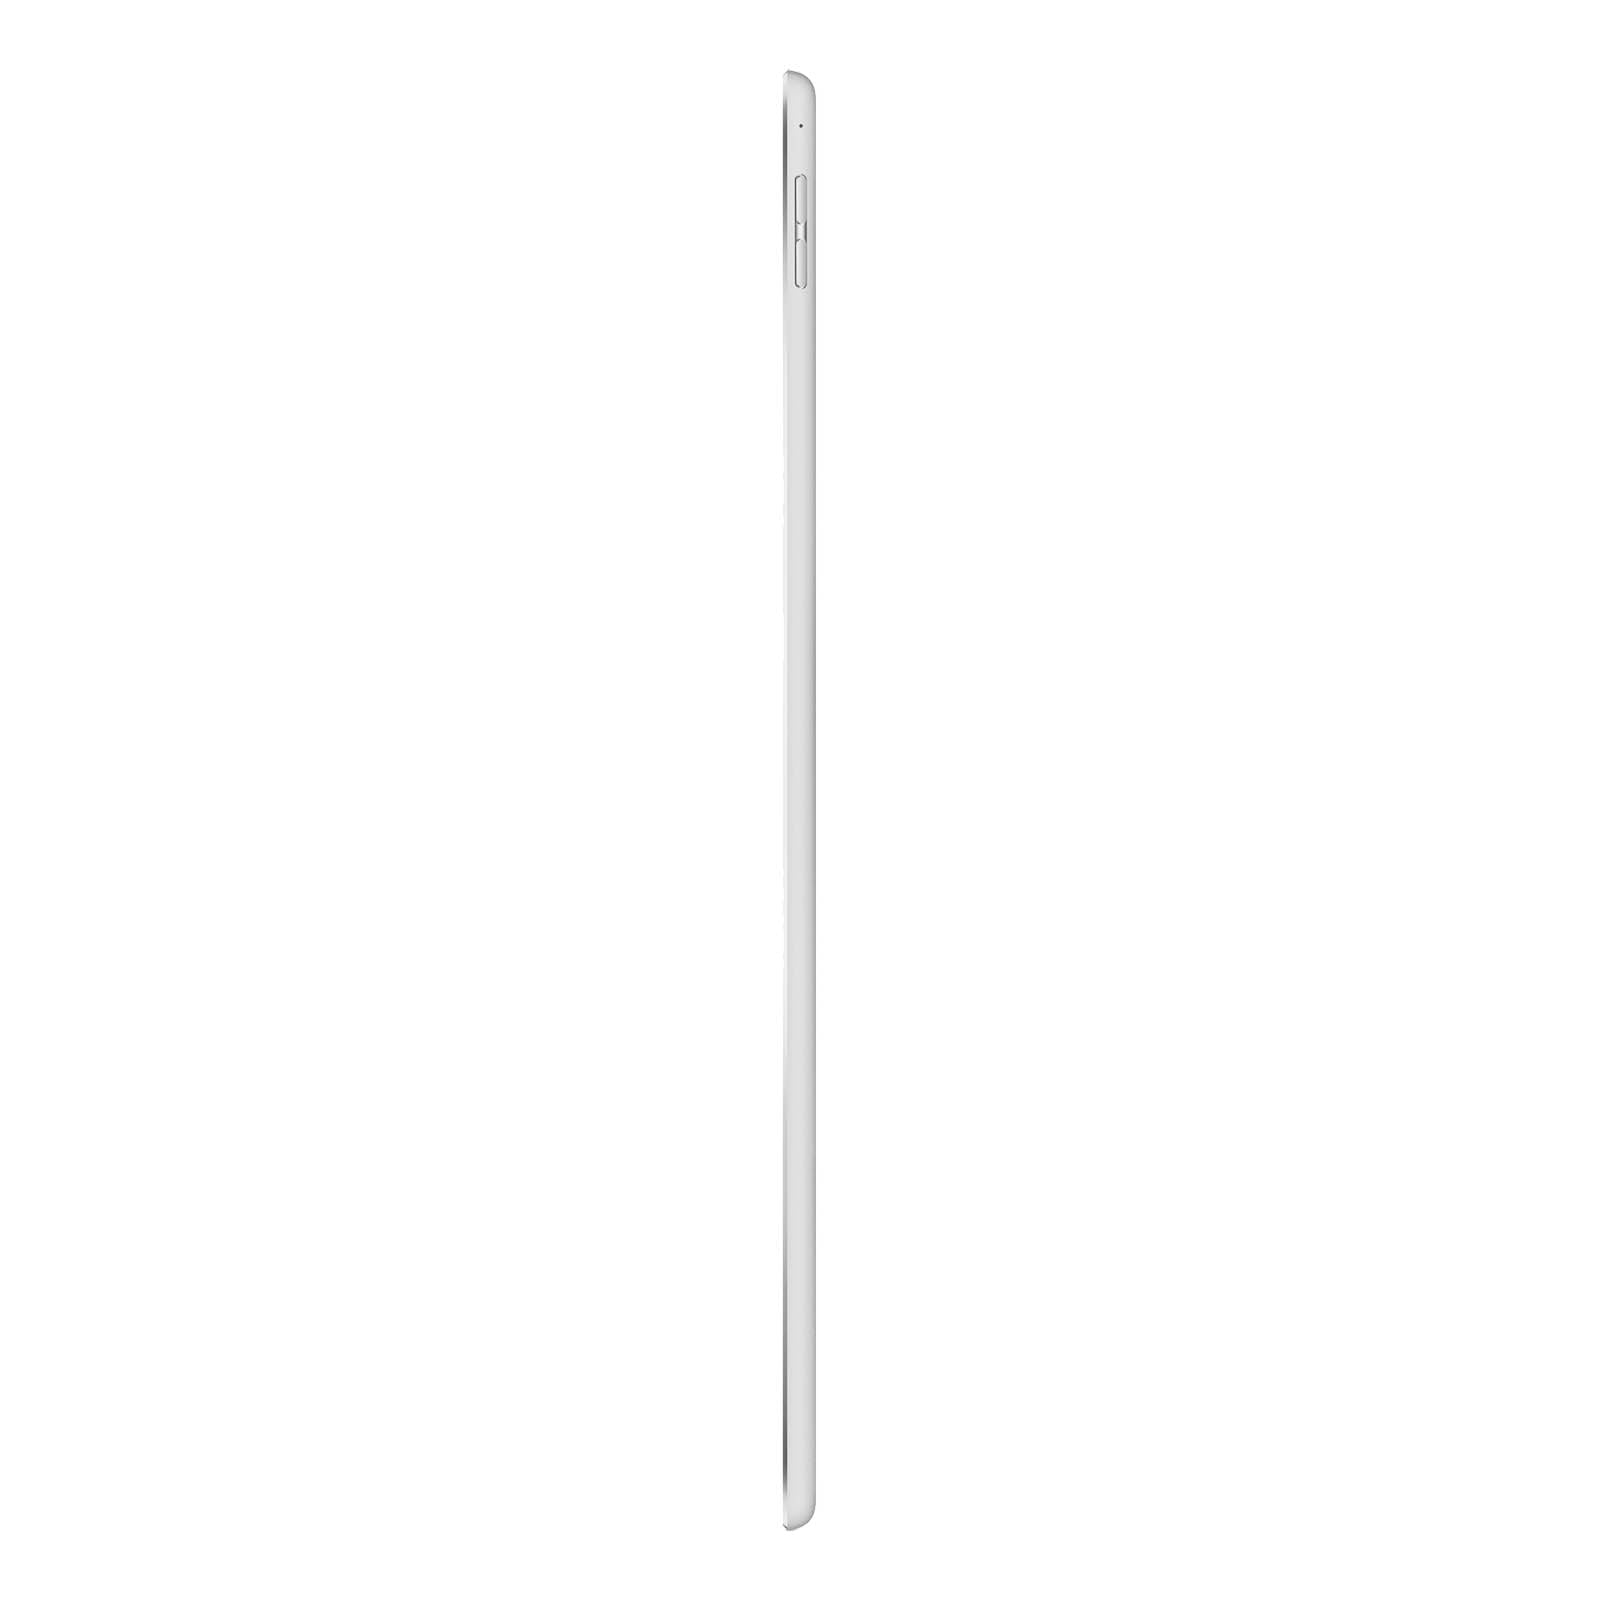 Apple iPad Pro 12.9 Inch 2nd Gen 256GB WiFi Silver Pristine